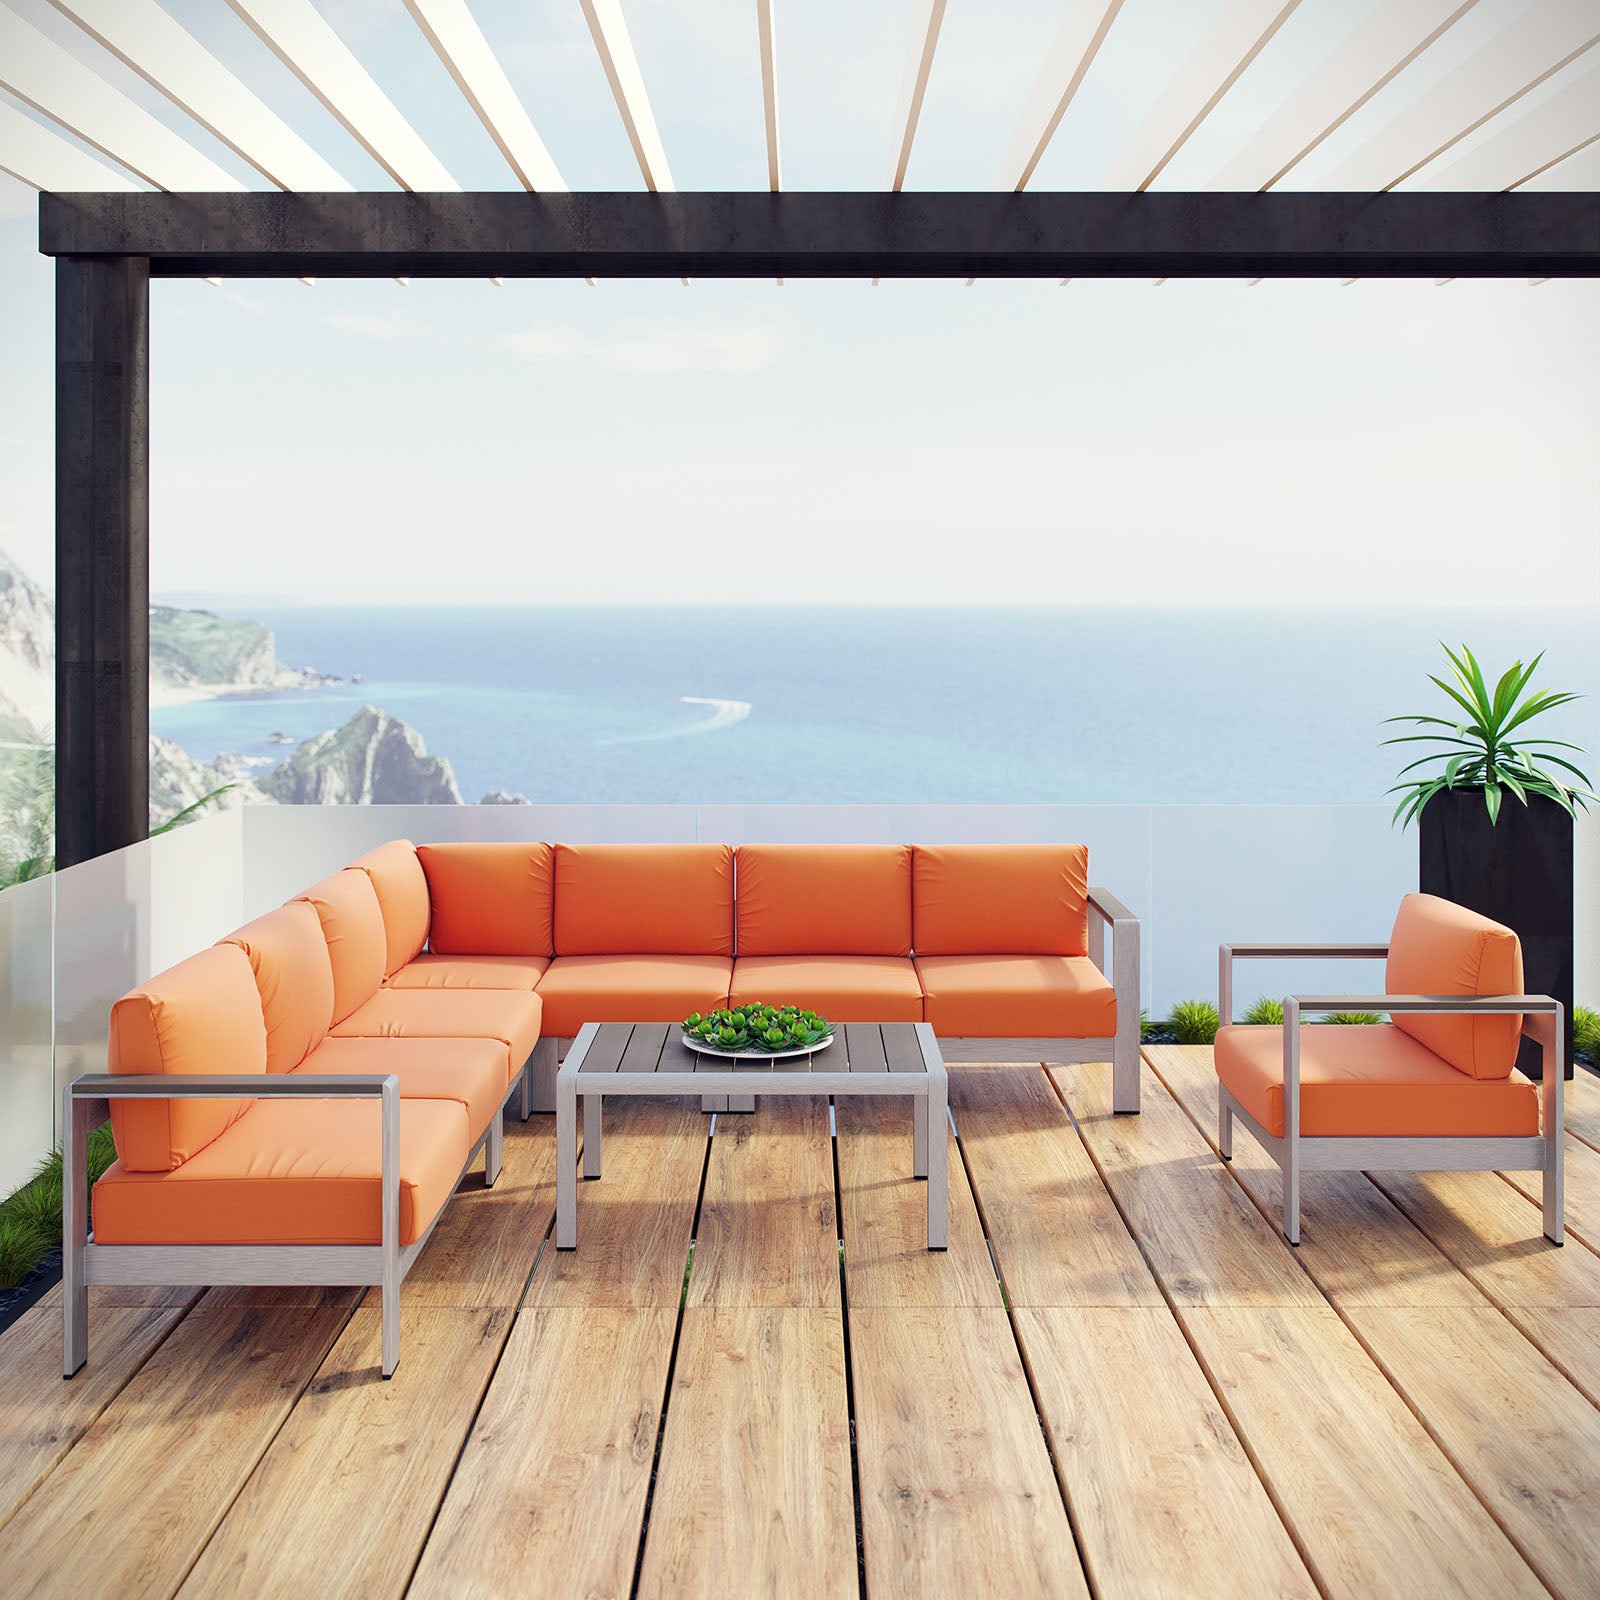 Shore 7 Piece Outdoor Patio Aluminum Sectional Sofa Set